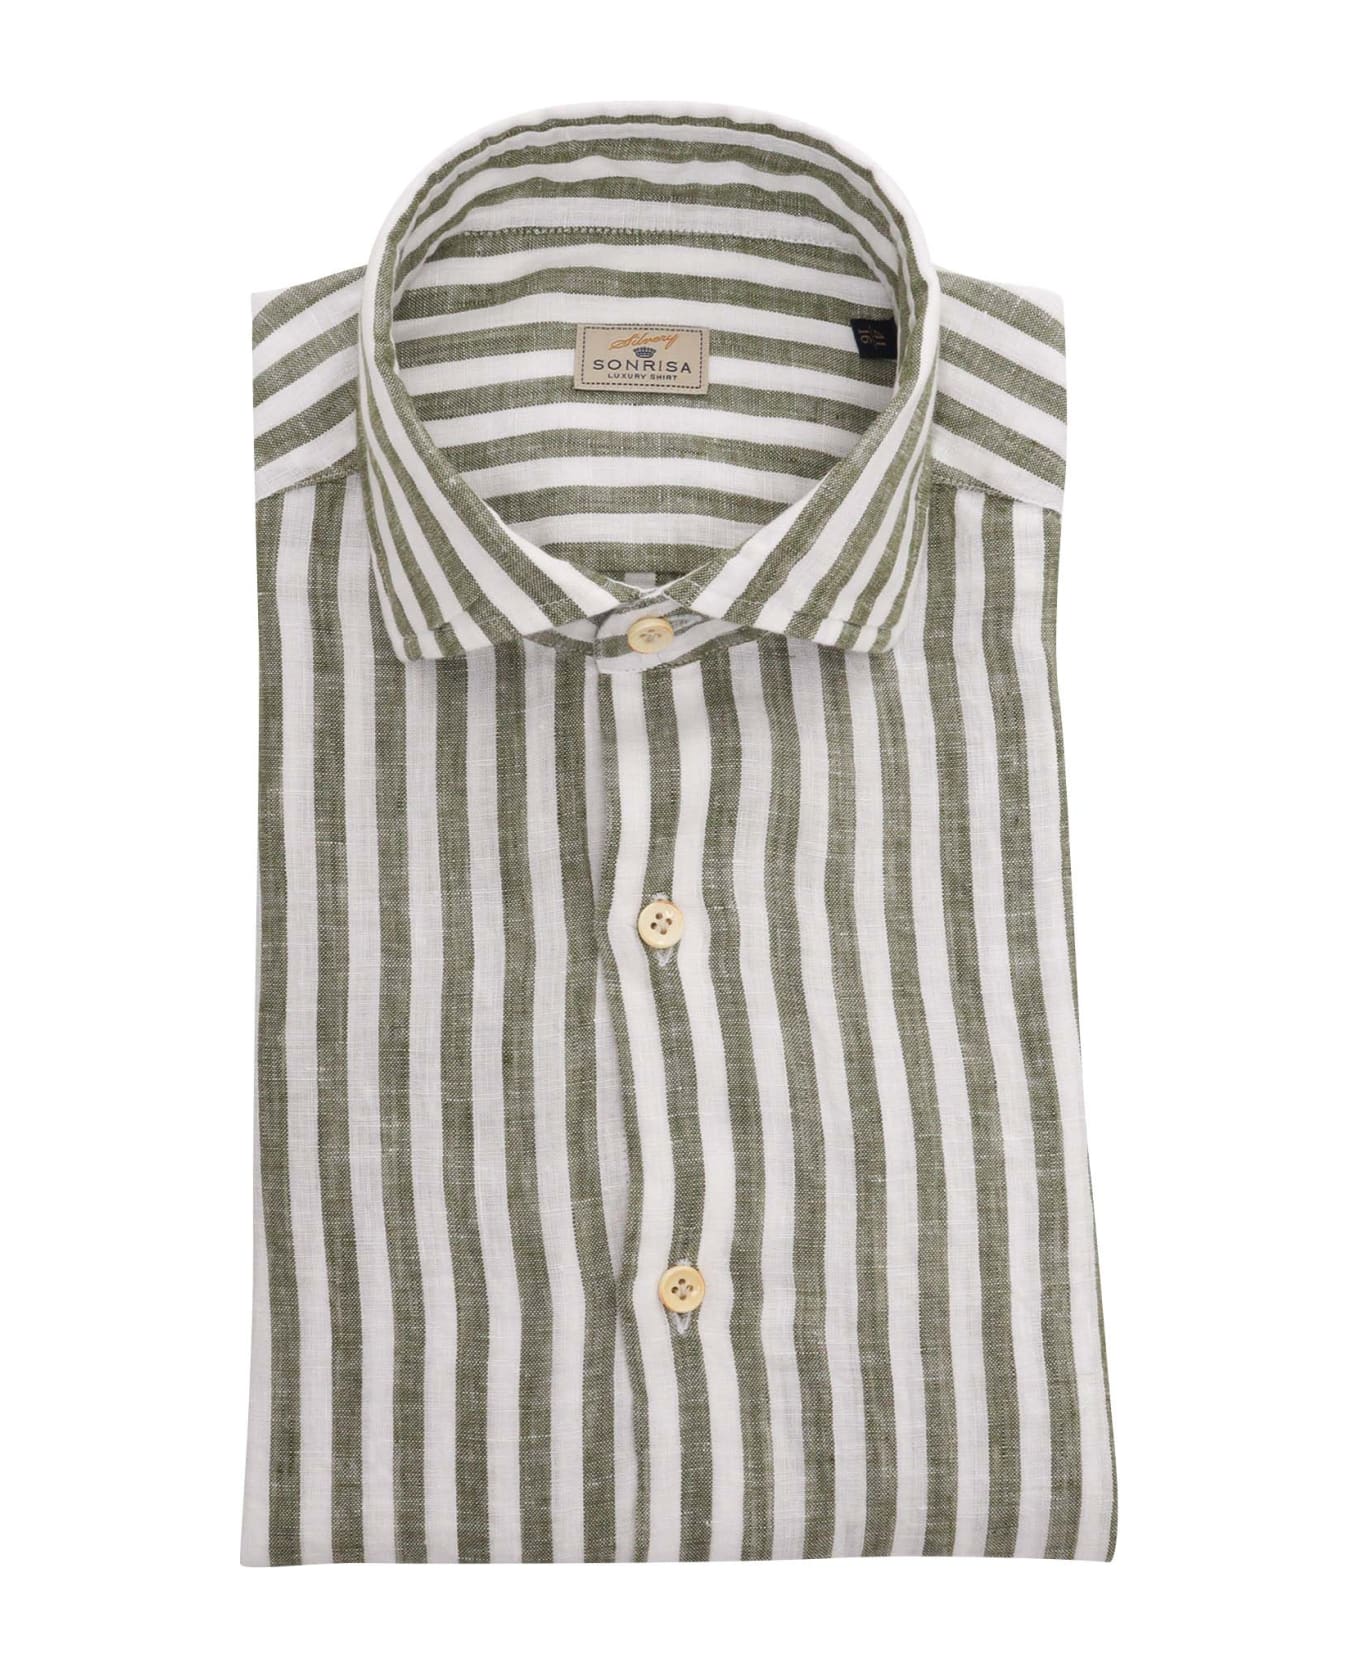 Sonrisa Brown Striped Shirt - MULTICOLOR シャツ